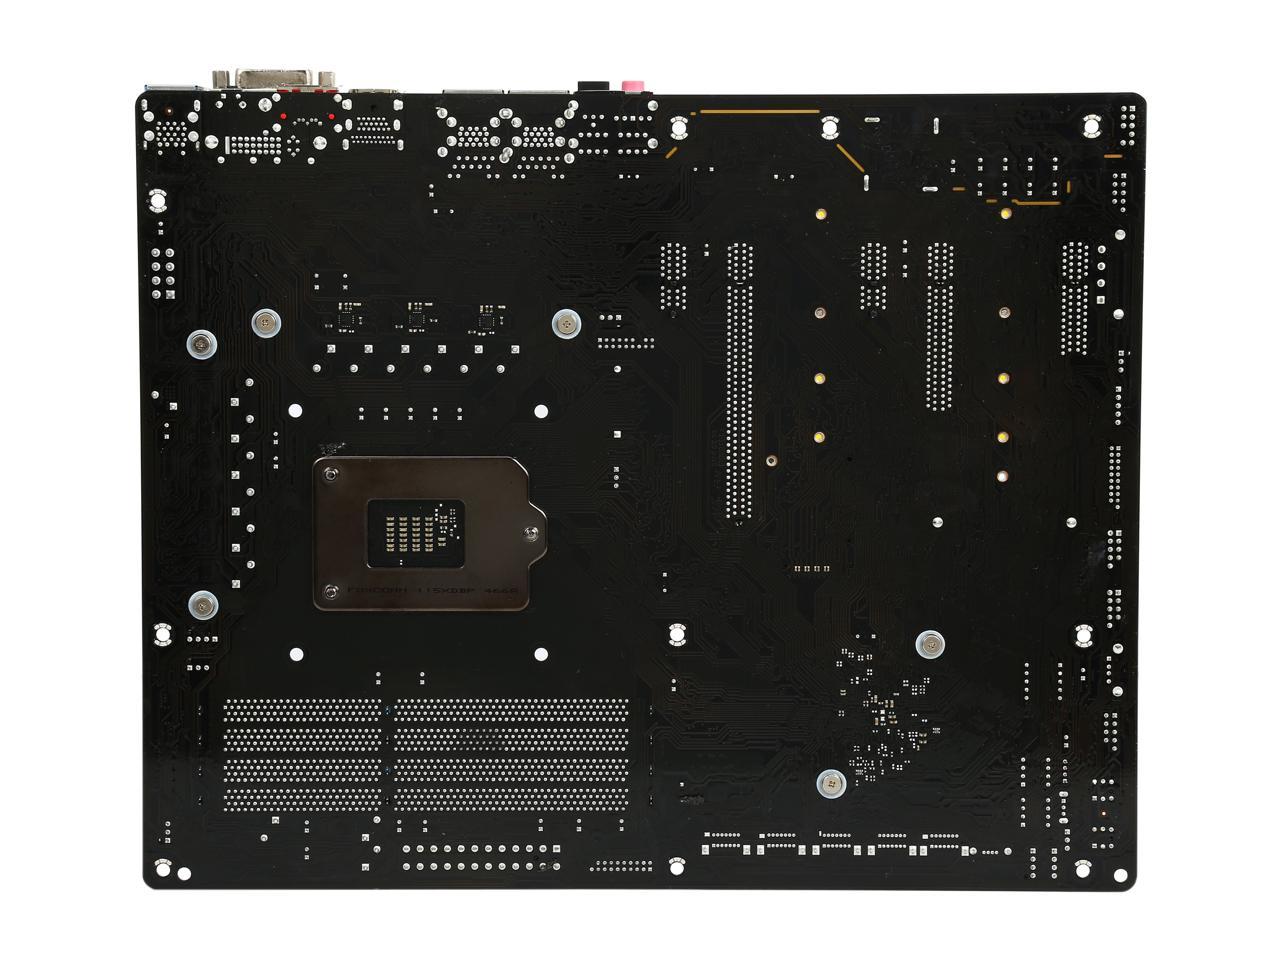 ASRock Z97 Extreme6/ac LGA 1150 Intel Z97 HDMI SATA 6Gb/s USB 3.0 ATX Intel Motherboard